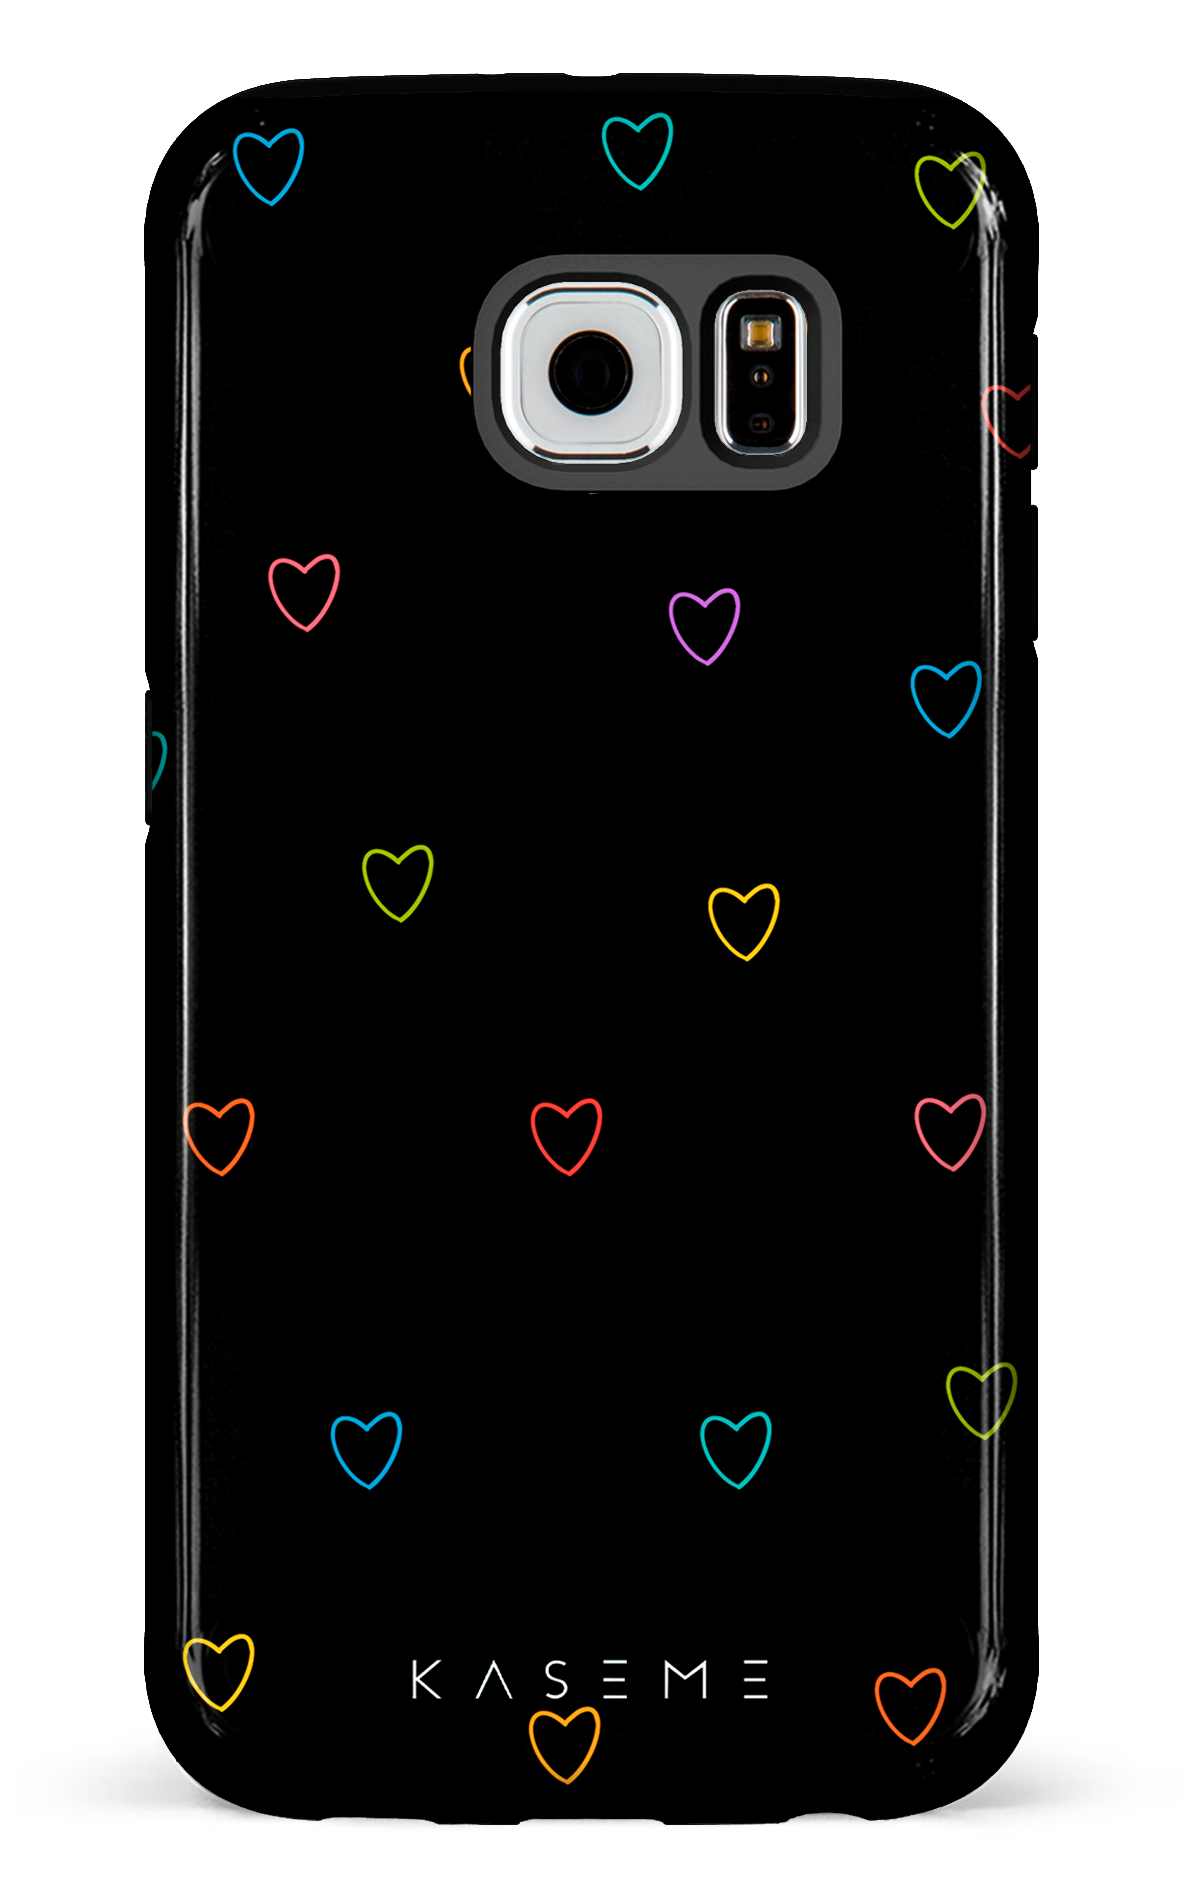 Love Wins - Galaxy S6